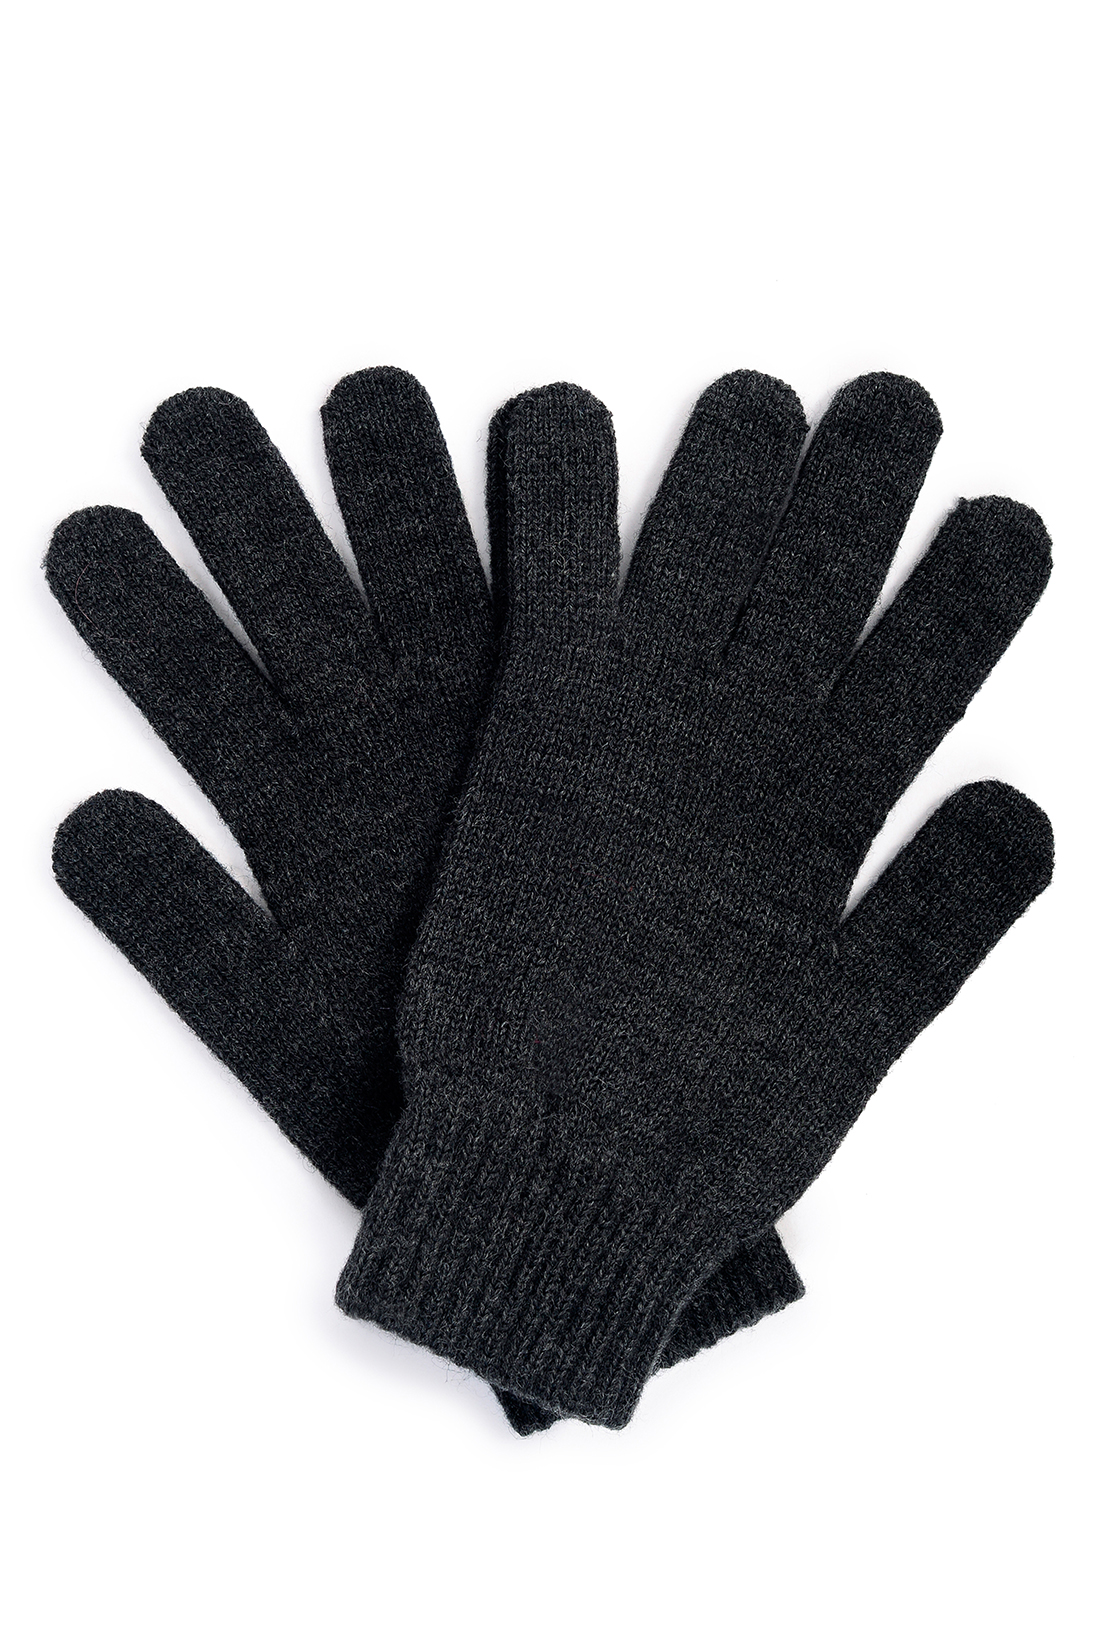 Полушерстяные перчатки (арт. baon B869501), размер Без/раз, цвет marengo melange#серый